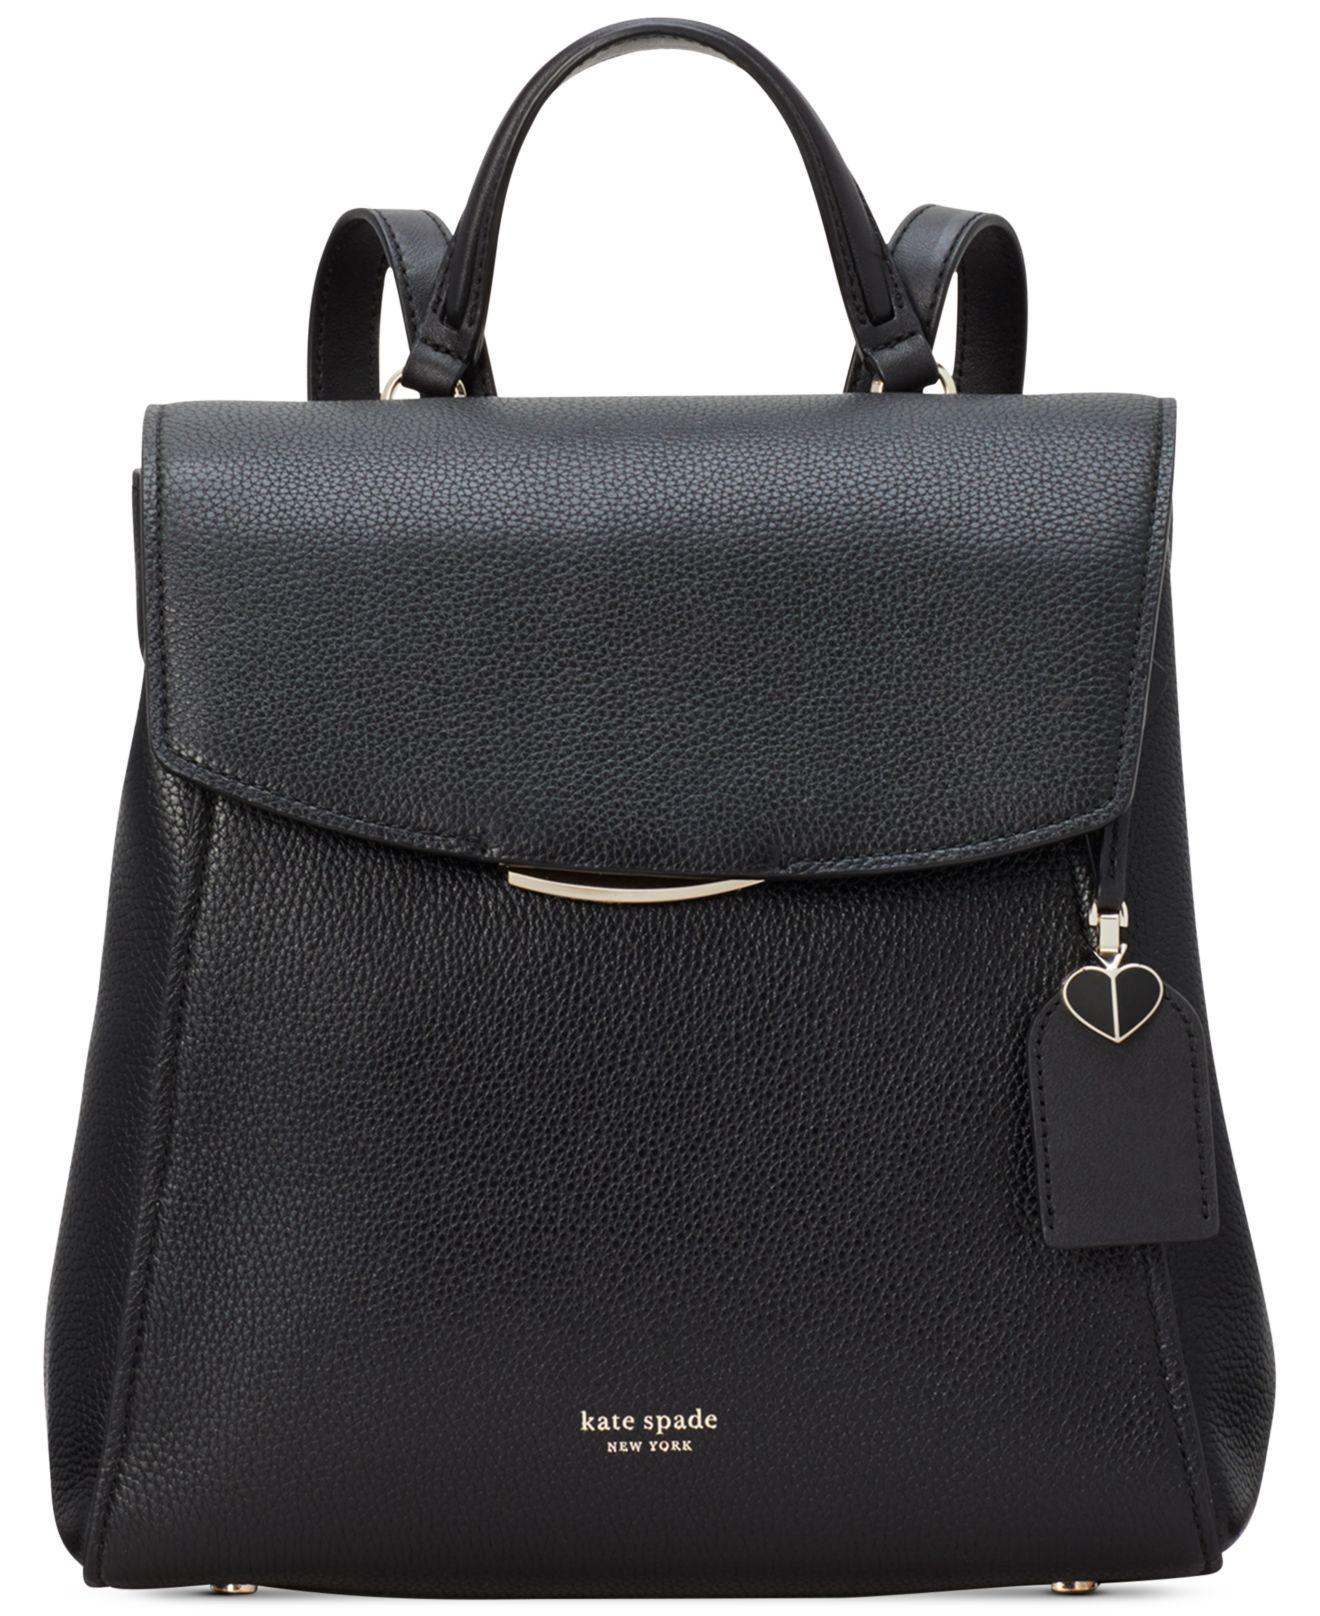 Kate Spade Grace Leather Backpack in Black/Gold (Black) - Lyst